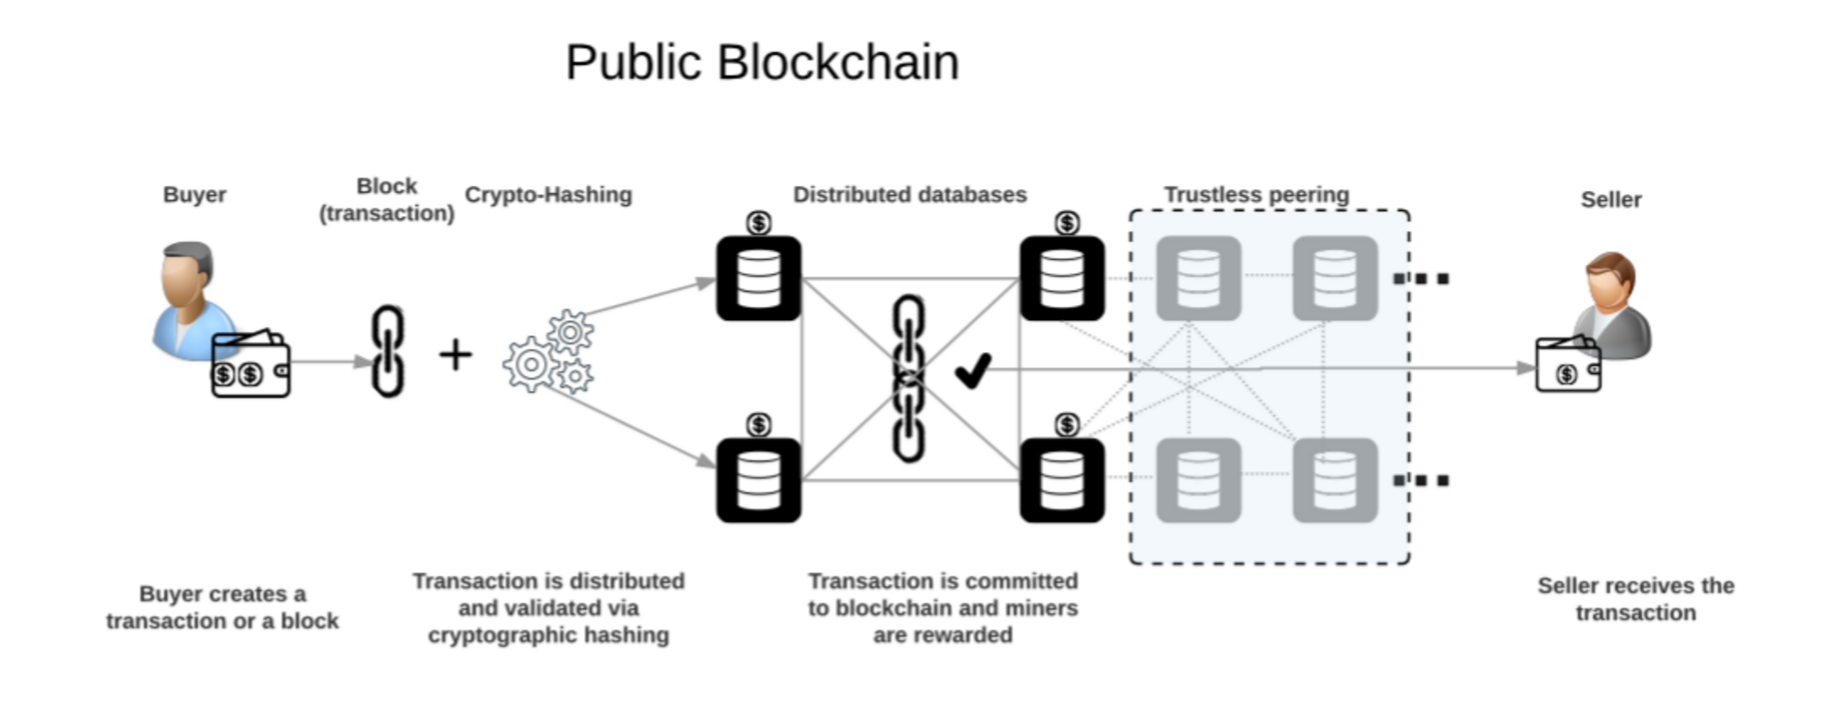 Public blockchain